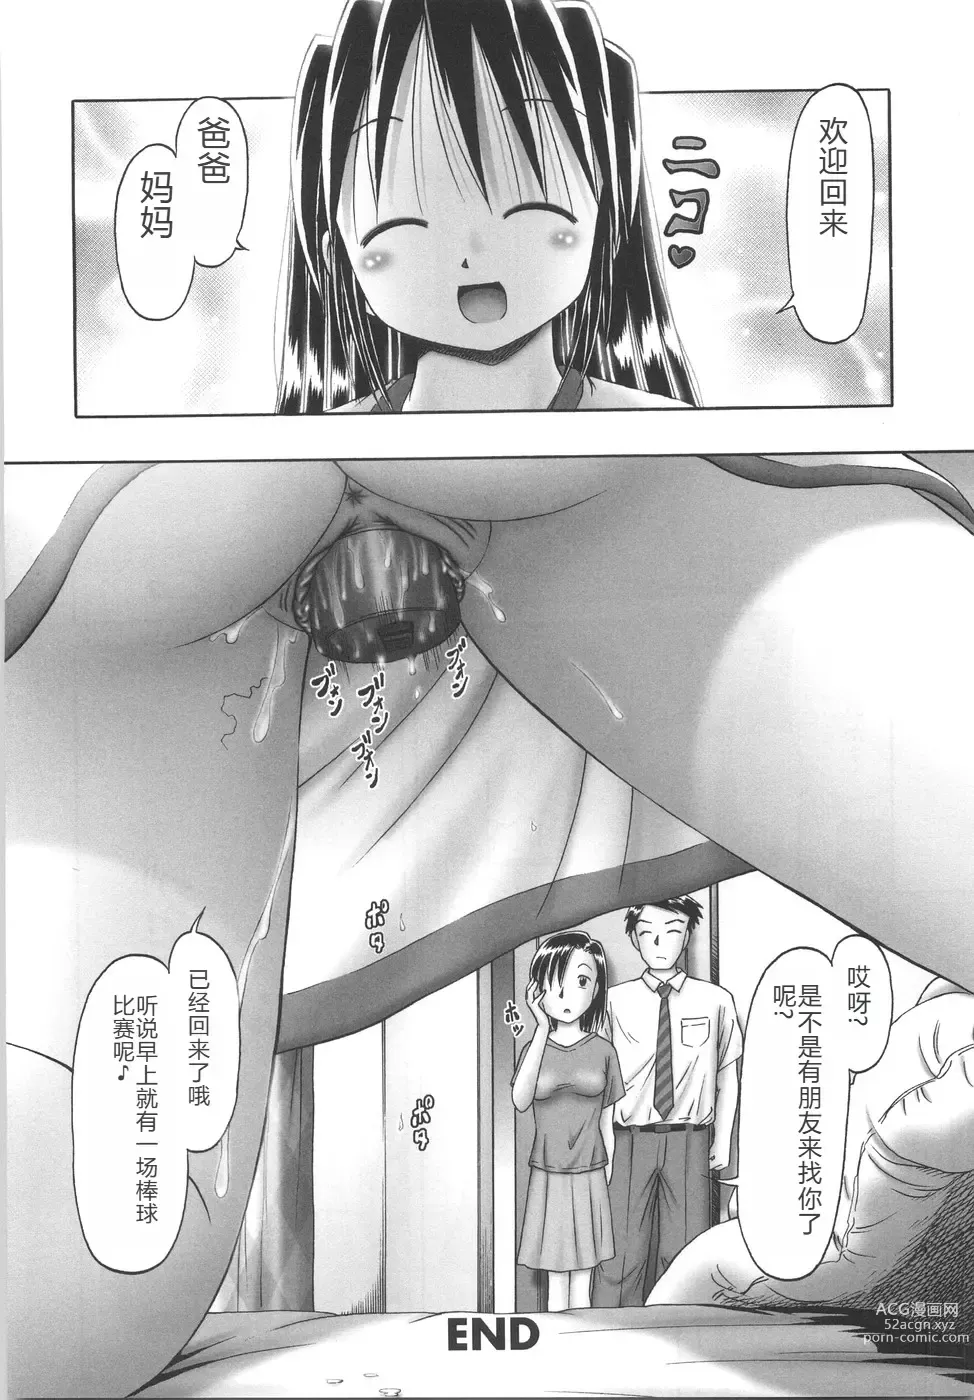 Page 232 of manga Hitoribocchi no Orusuban